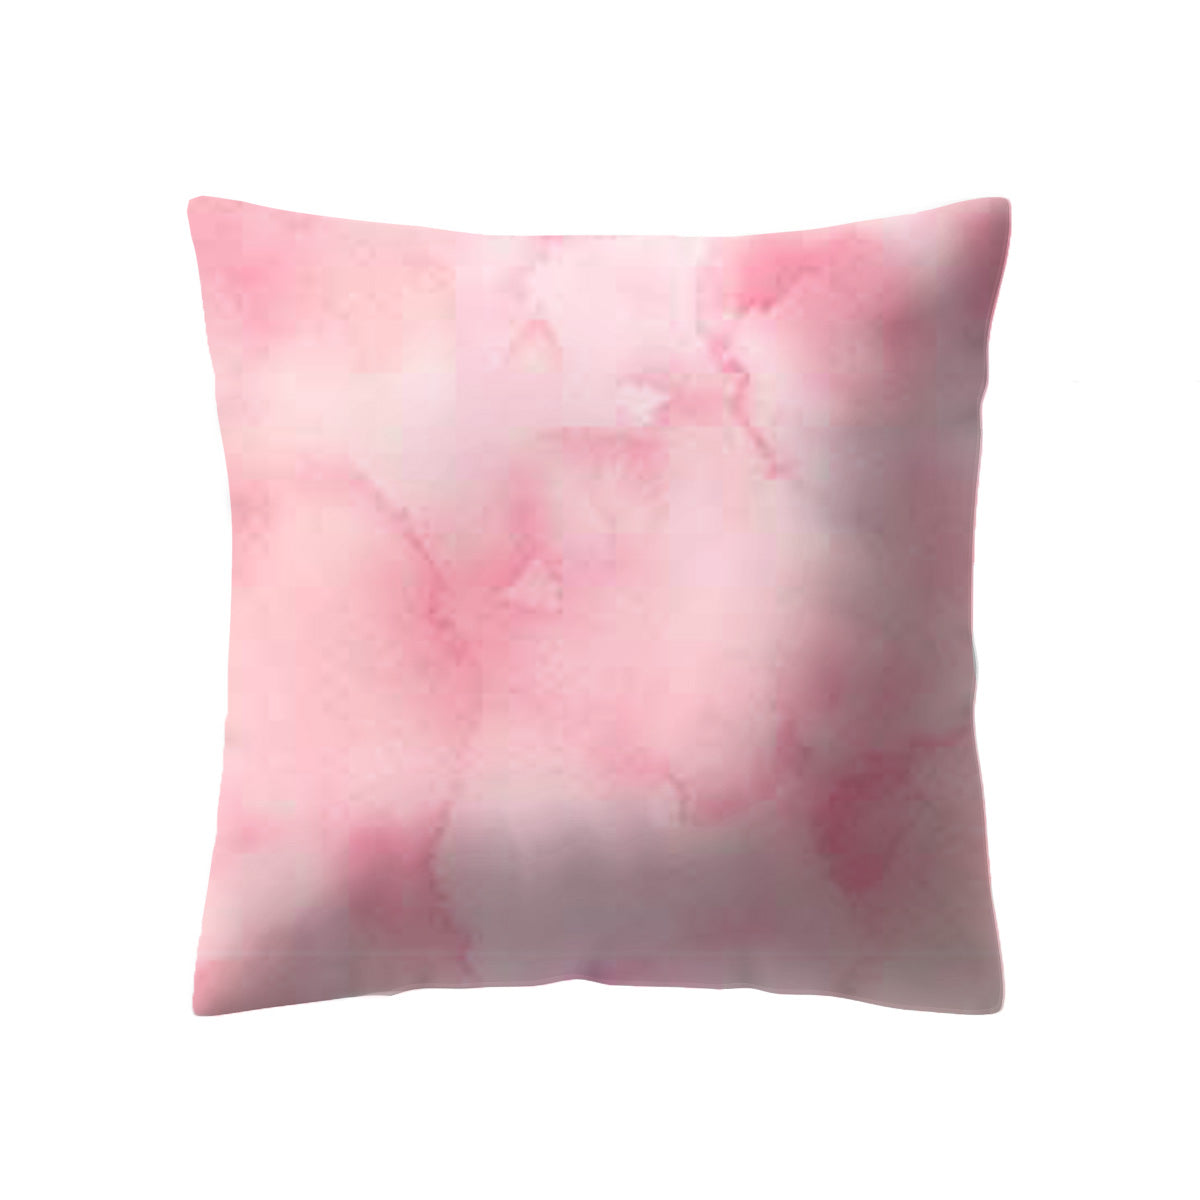 Pink Watercolour Sensory Cushion